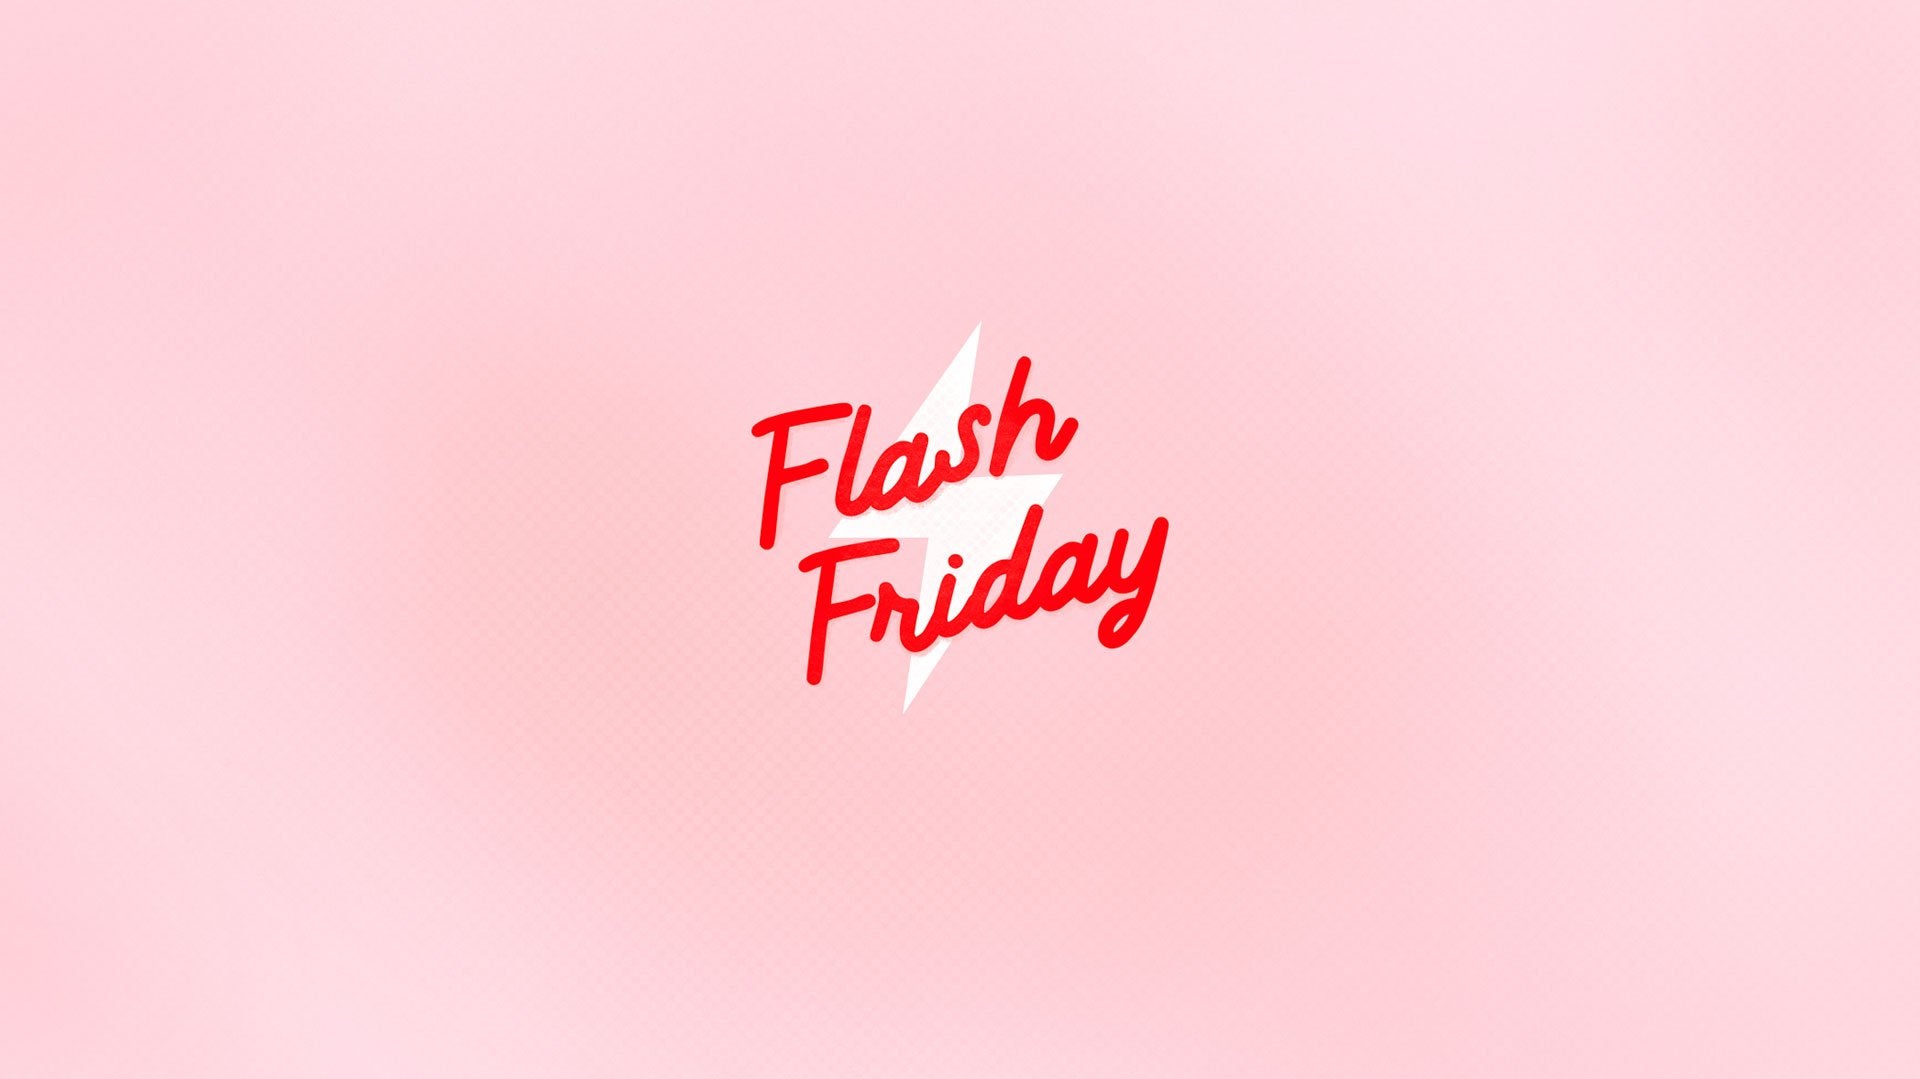 Say Hello Flash Friday